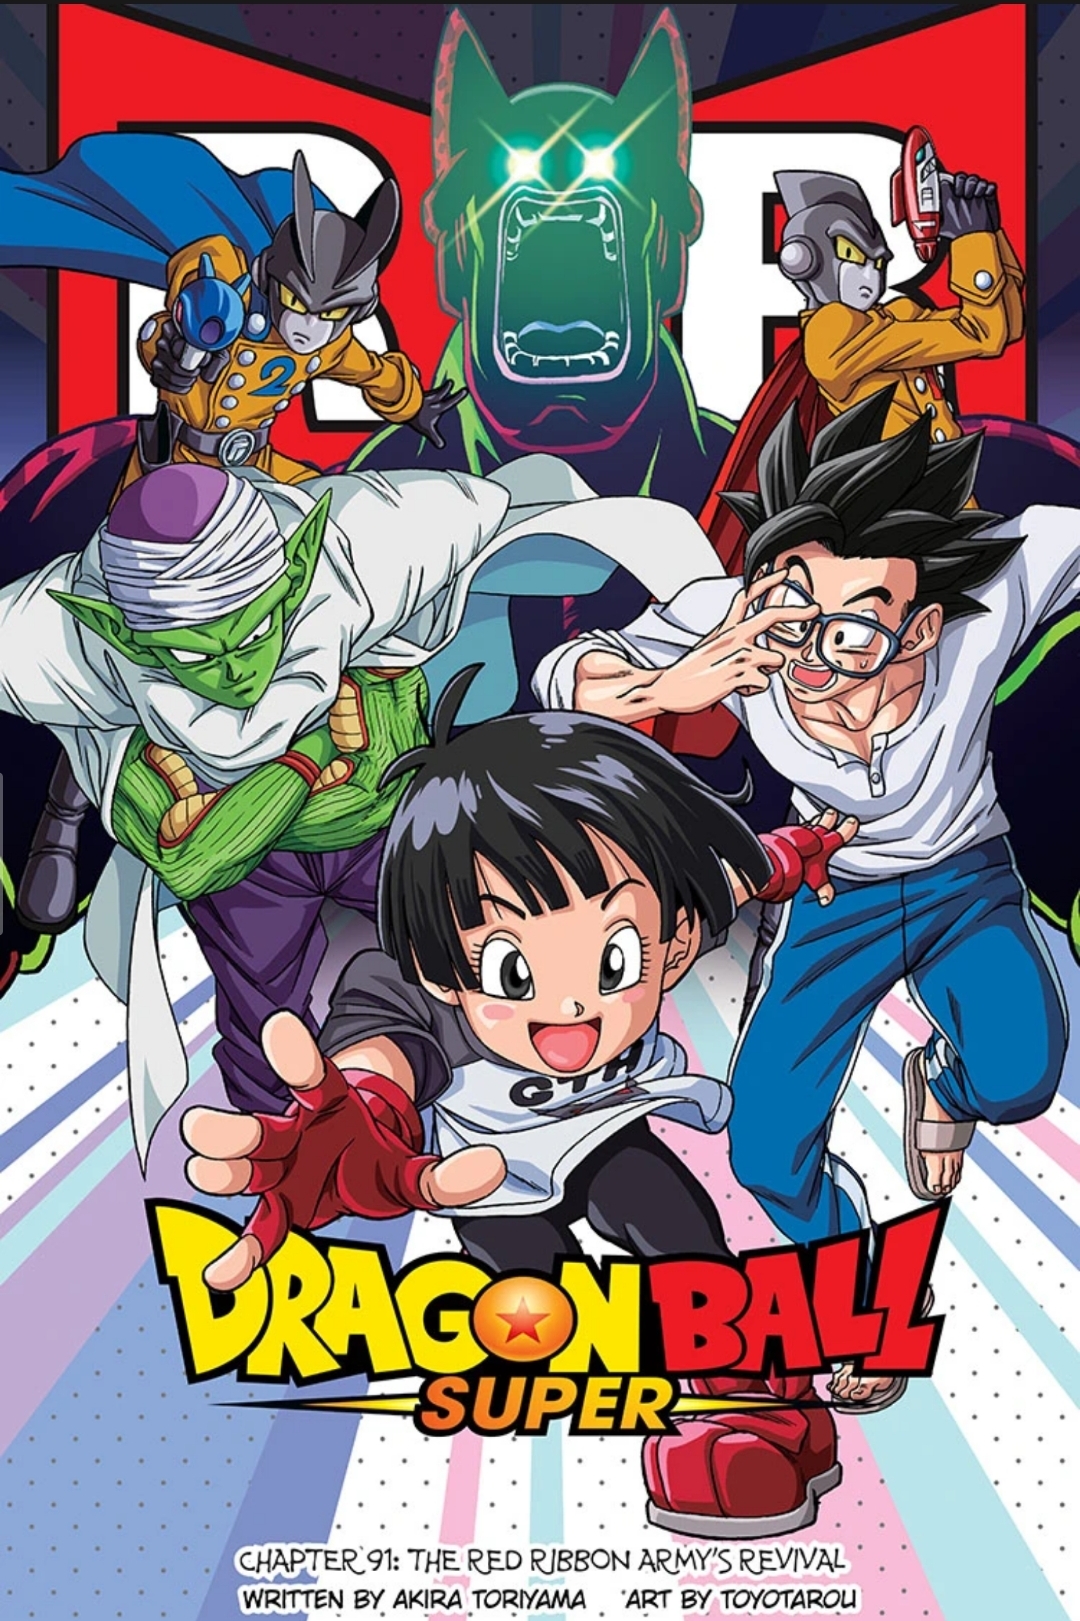 DRAGON BALL SUPER MANGA CAP 76, Completo e Traduzido Pt-Br